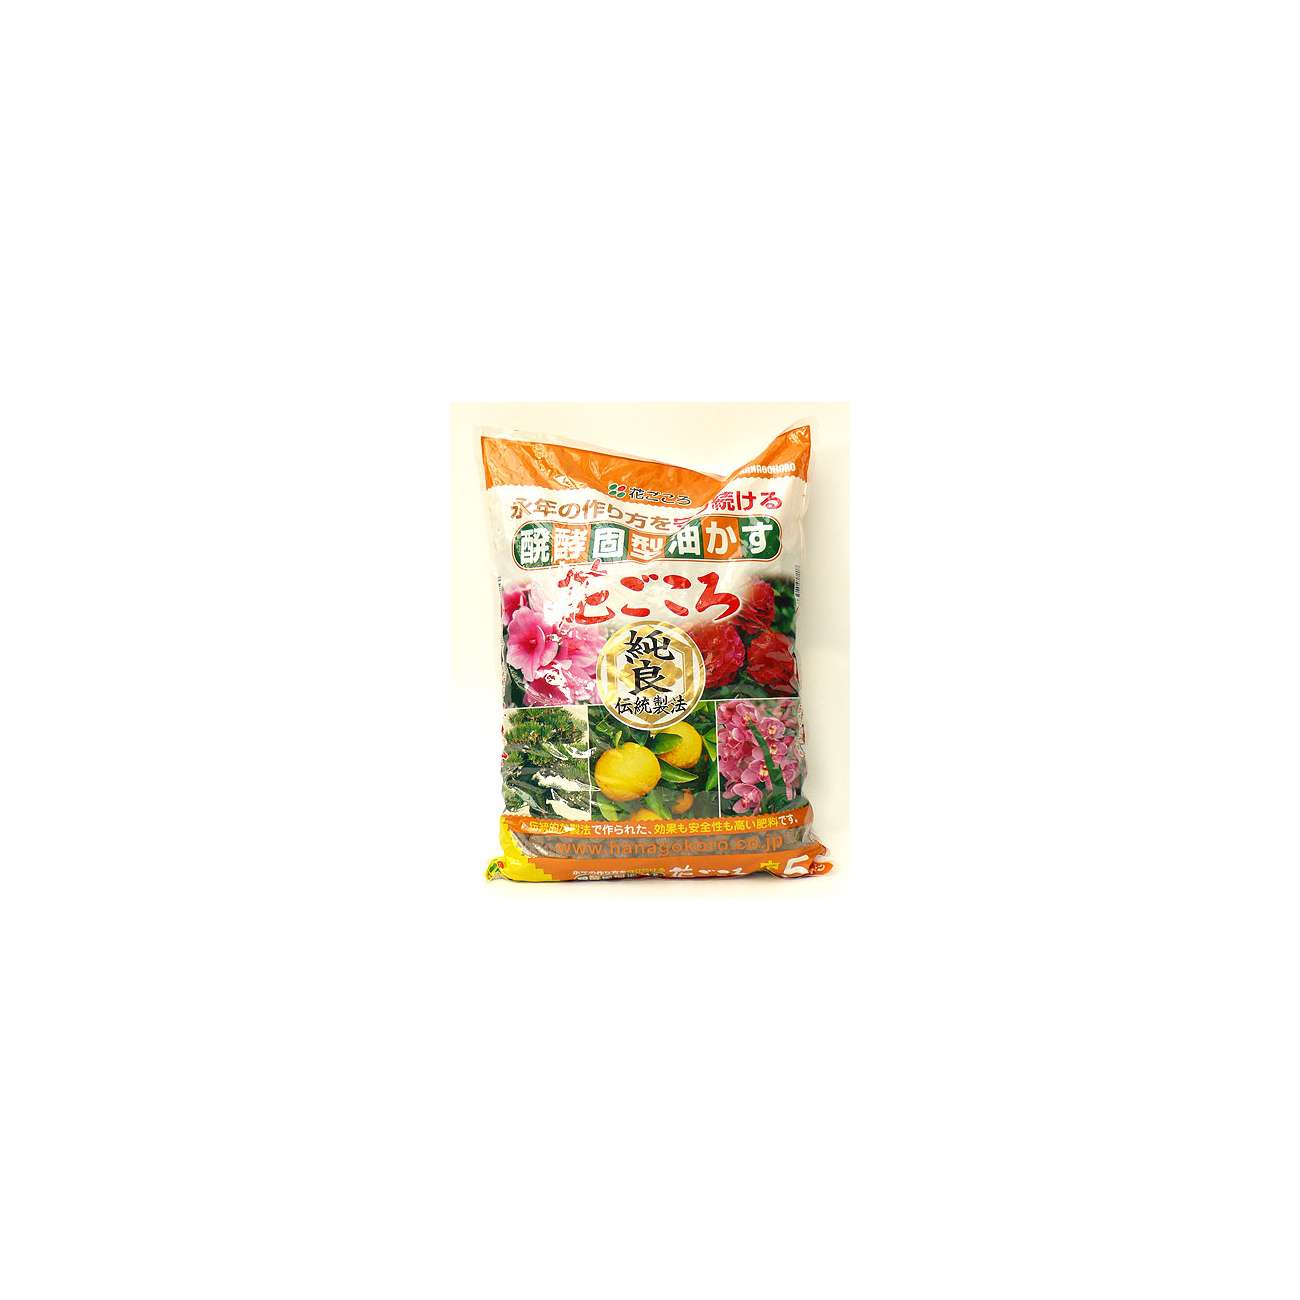 Abono orgánico japonés Hanagokoro grano fino 3 Kg